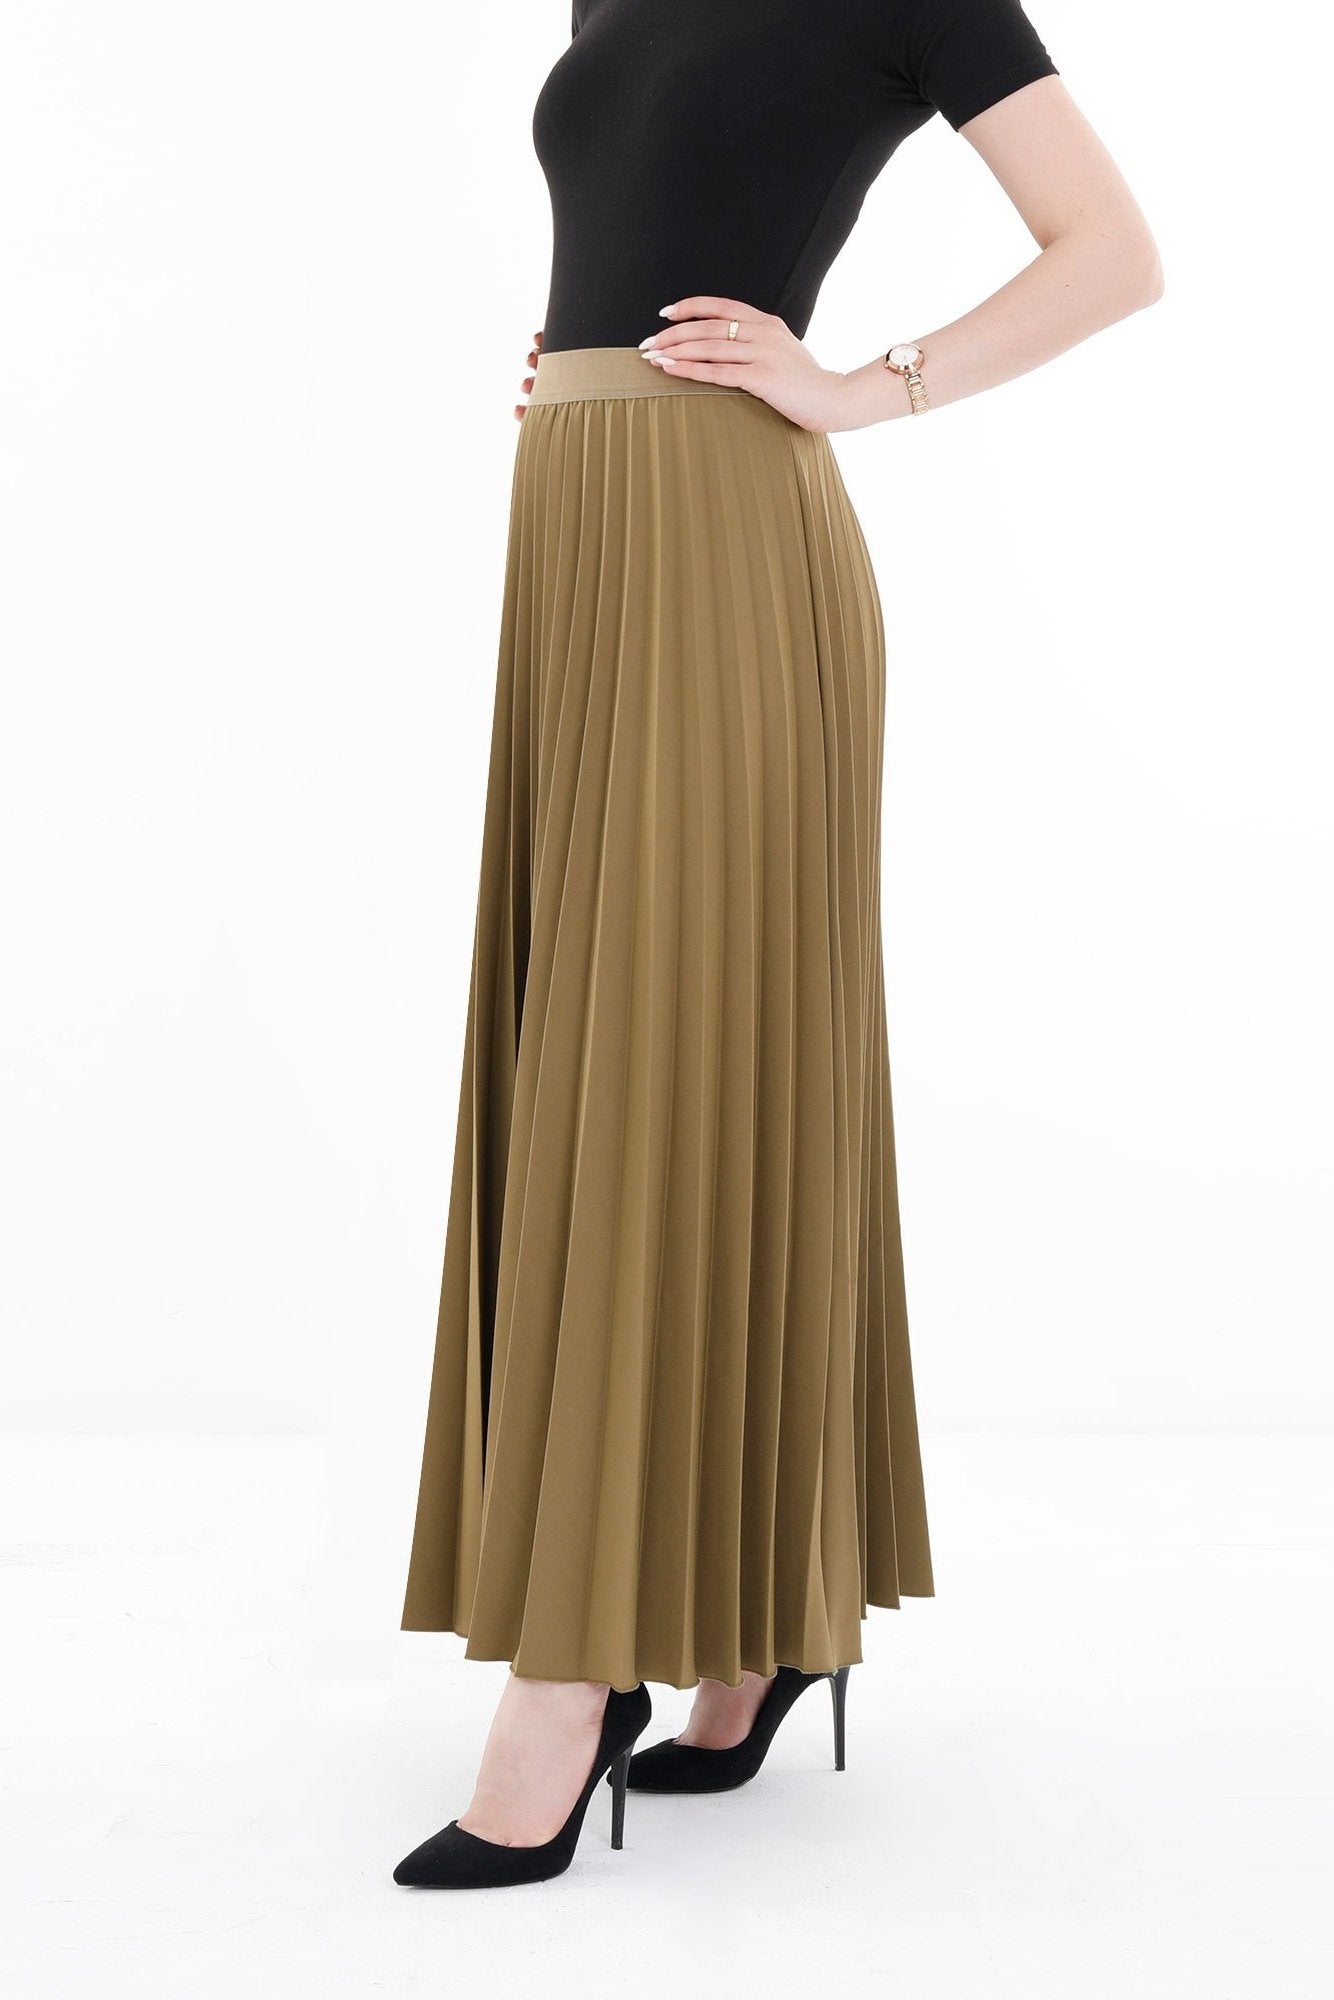 Khaki Pleated Maxi Skirt Elastic Waist Band Ankle Length Skirt Glinetex